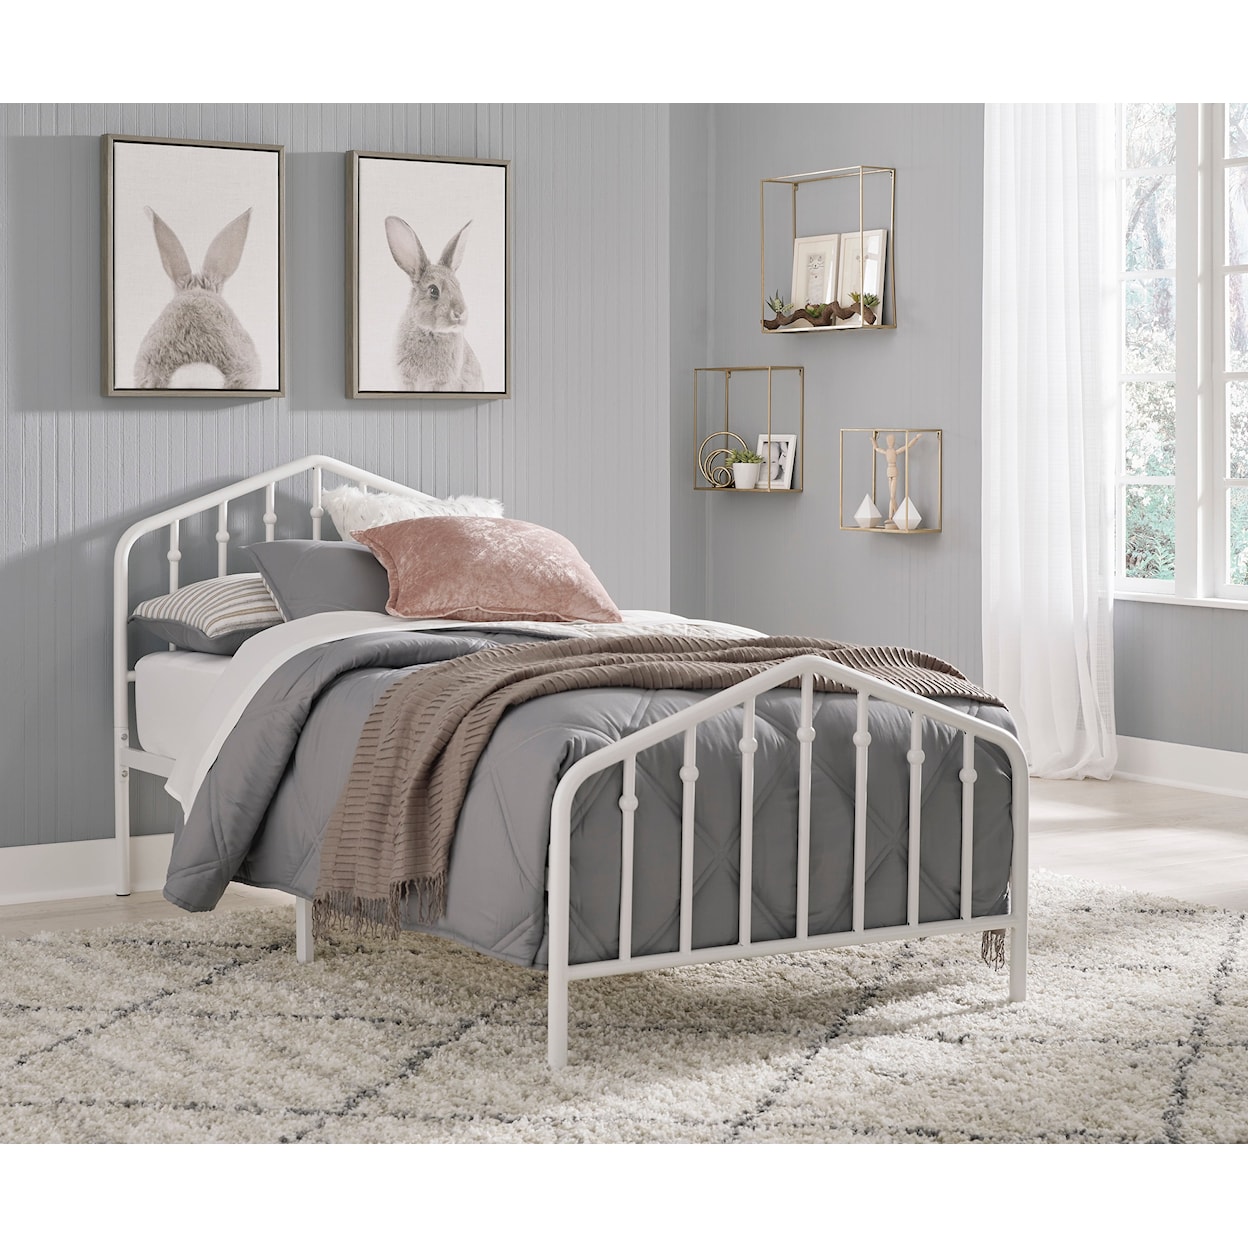 Ashley Furniture Signature Design Trentlore Twin Metal Bed